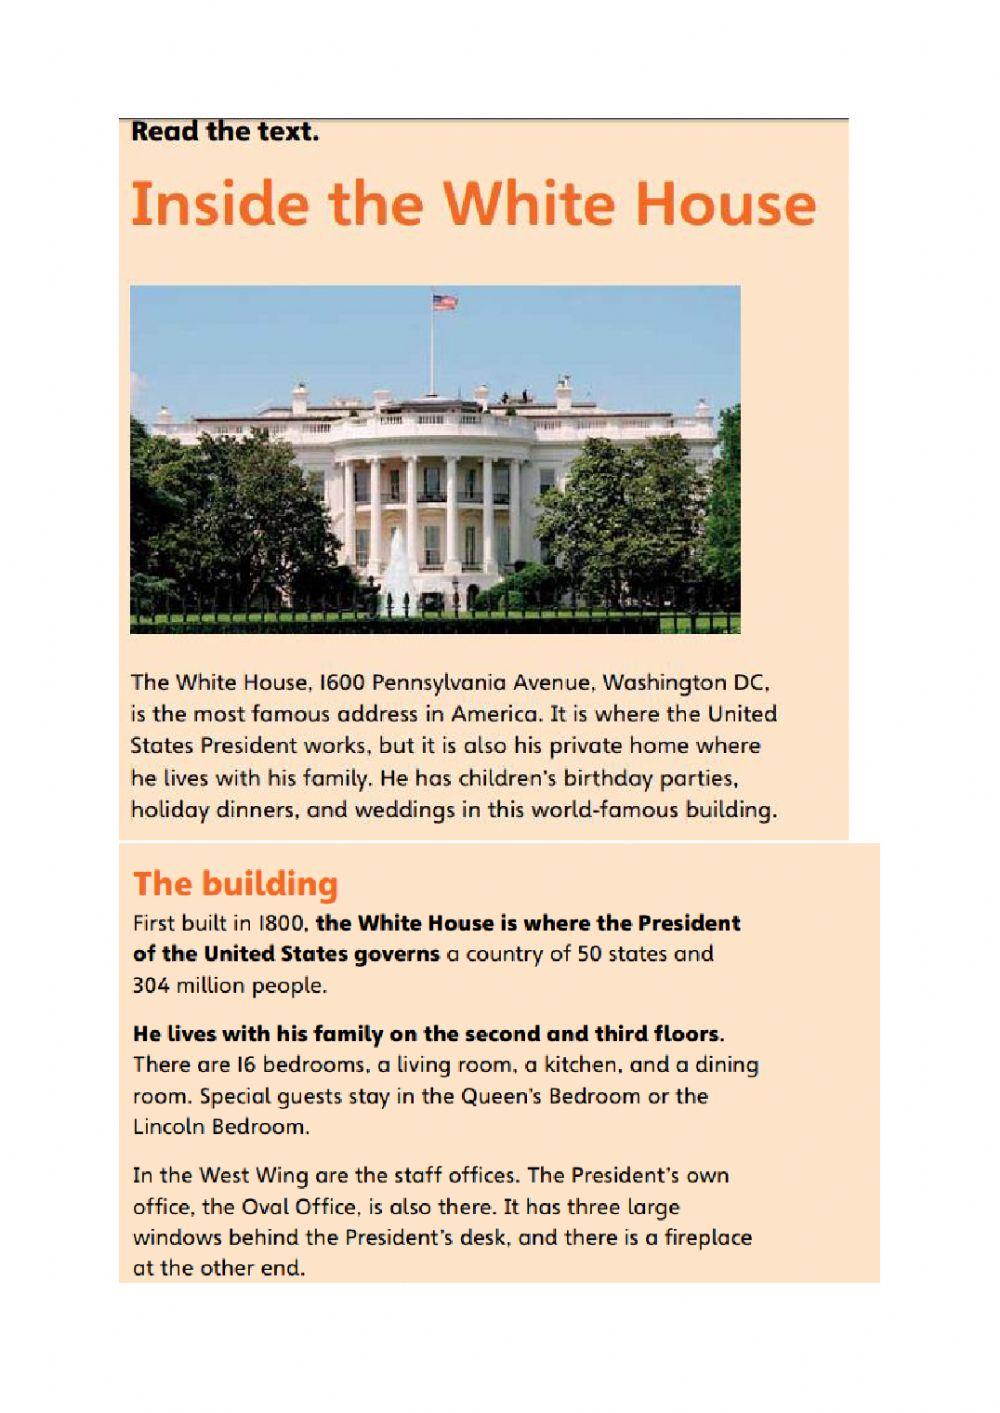 Inside the White House2